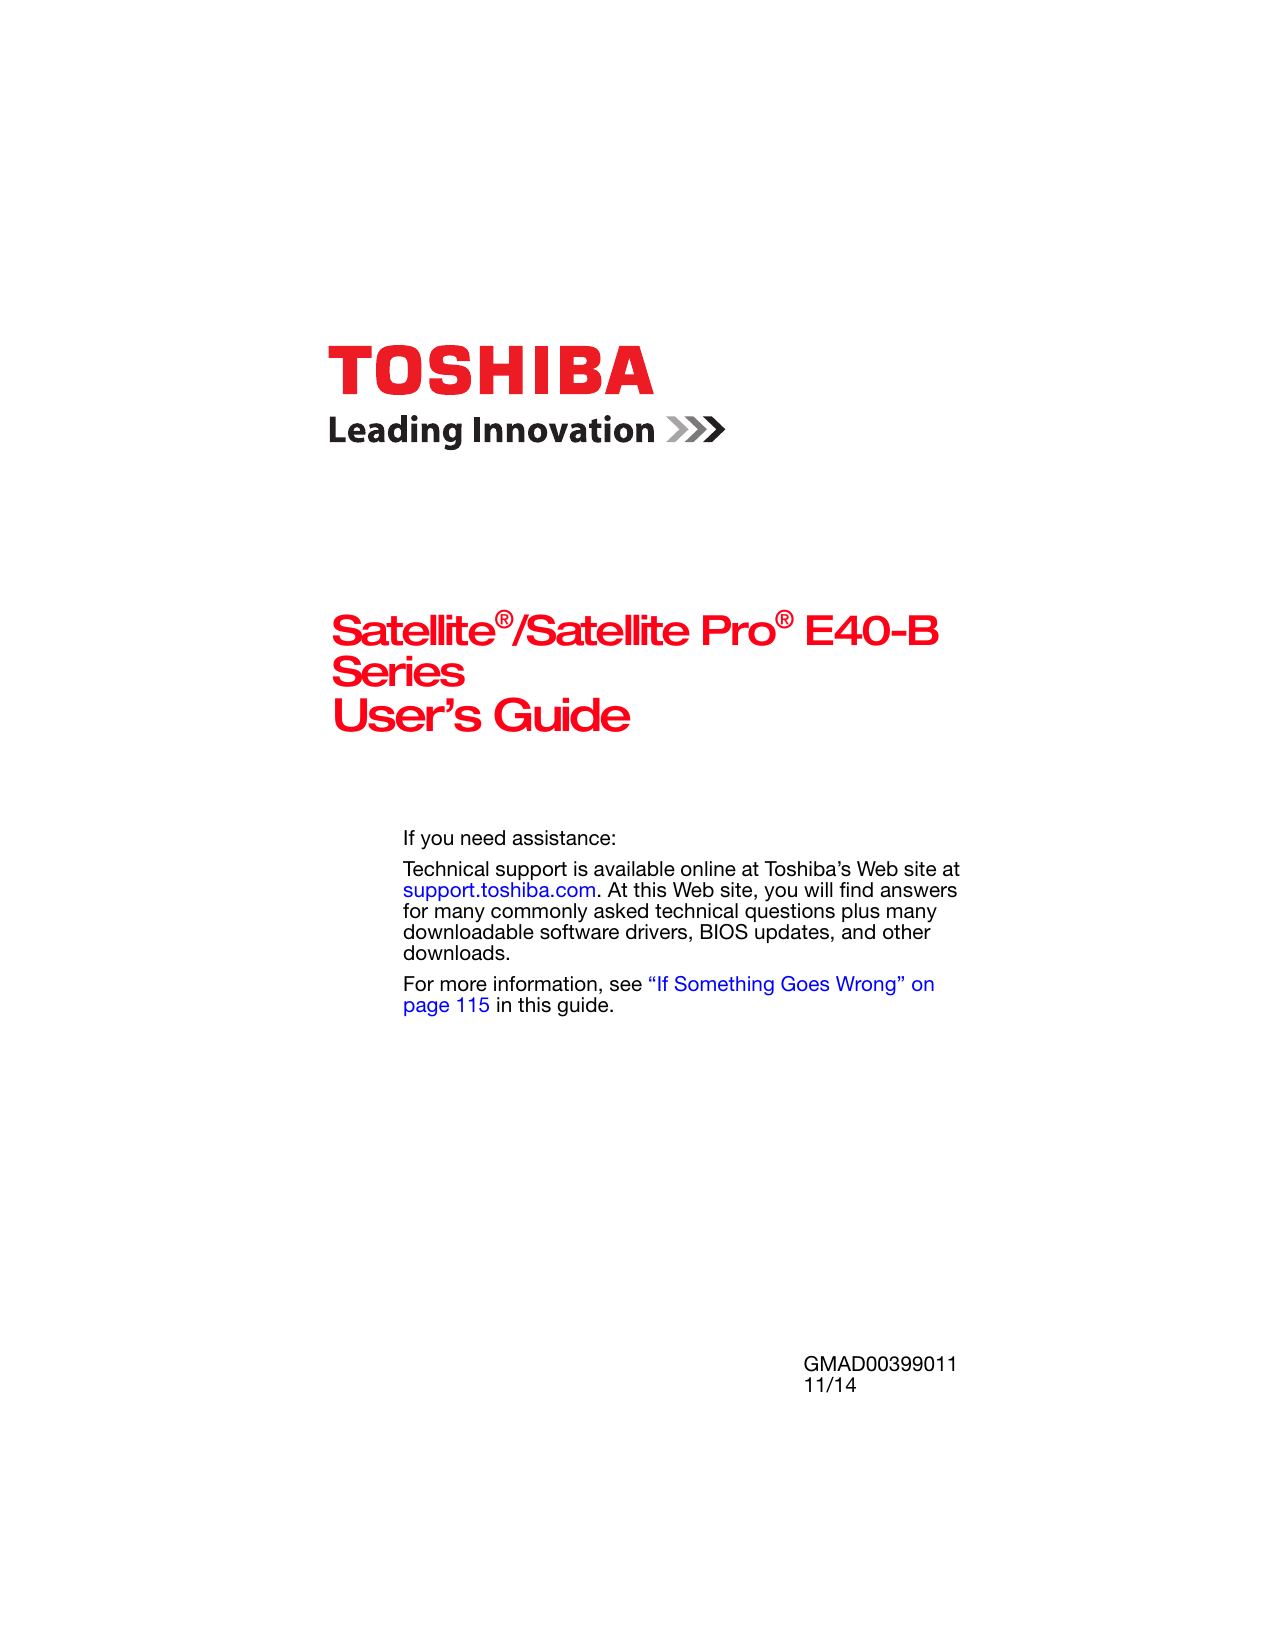 toshiba hotkey utility toshiba shared module not found